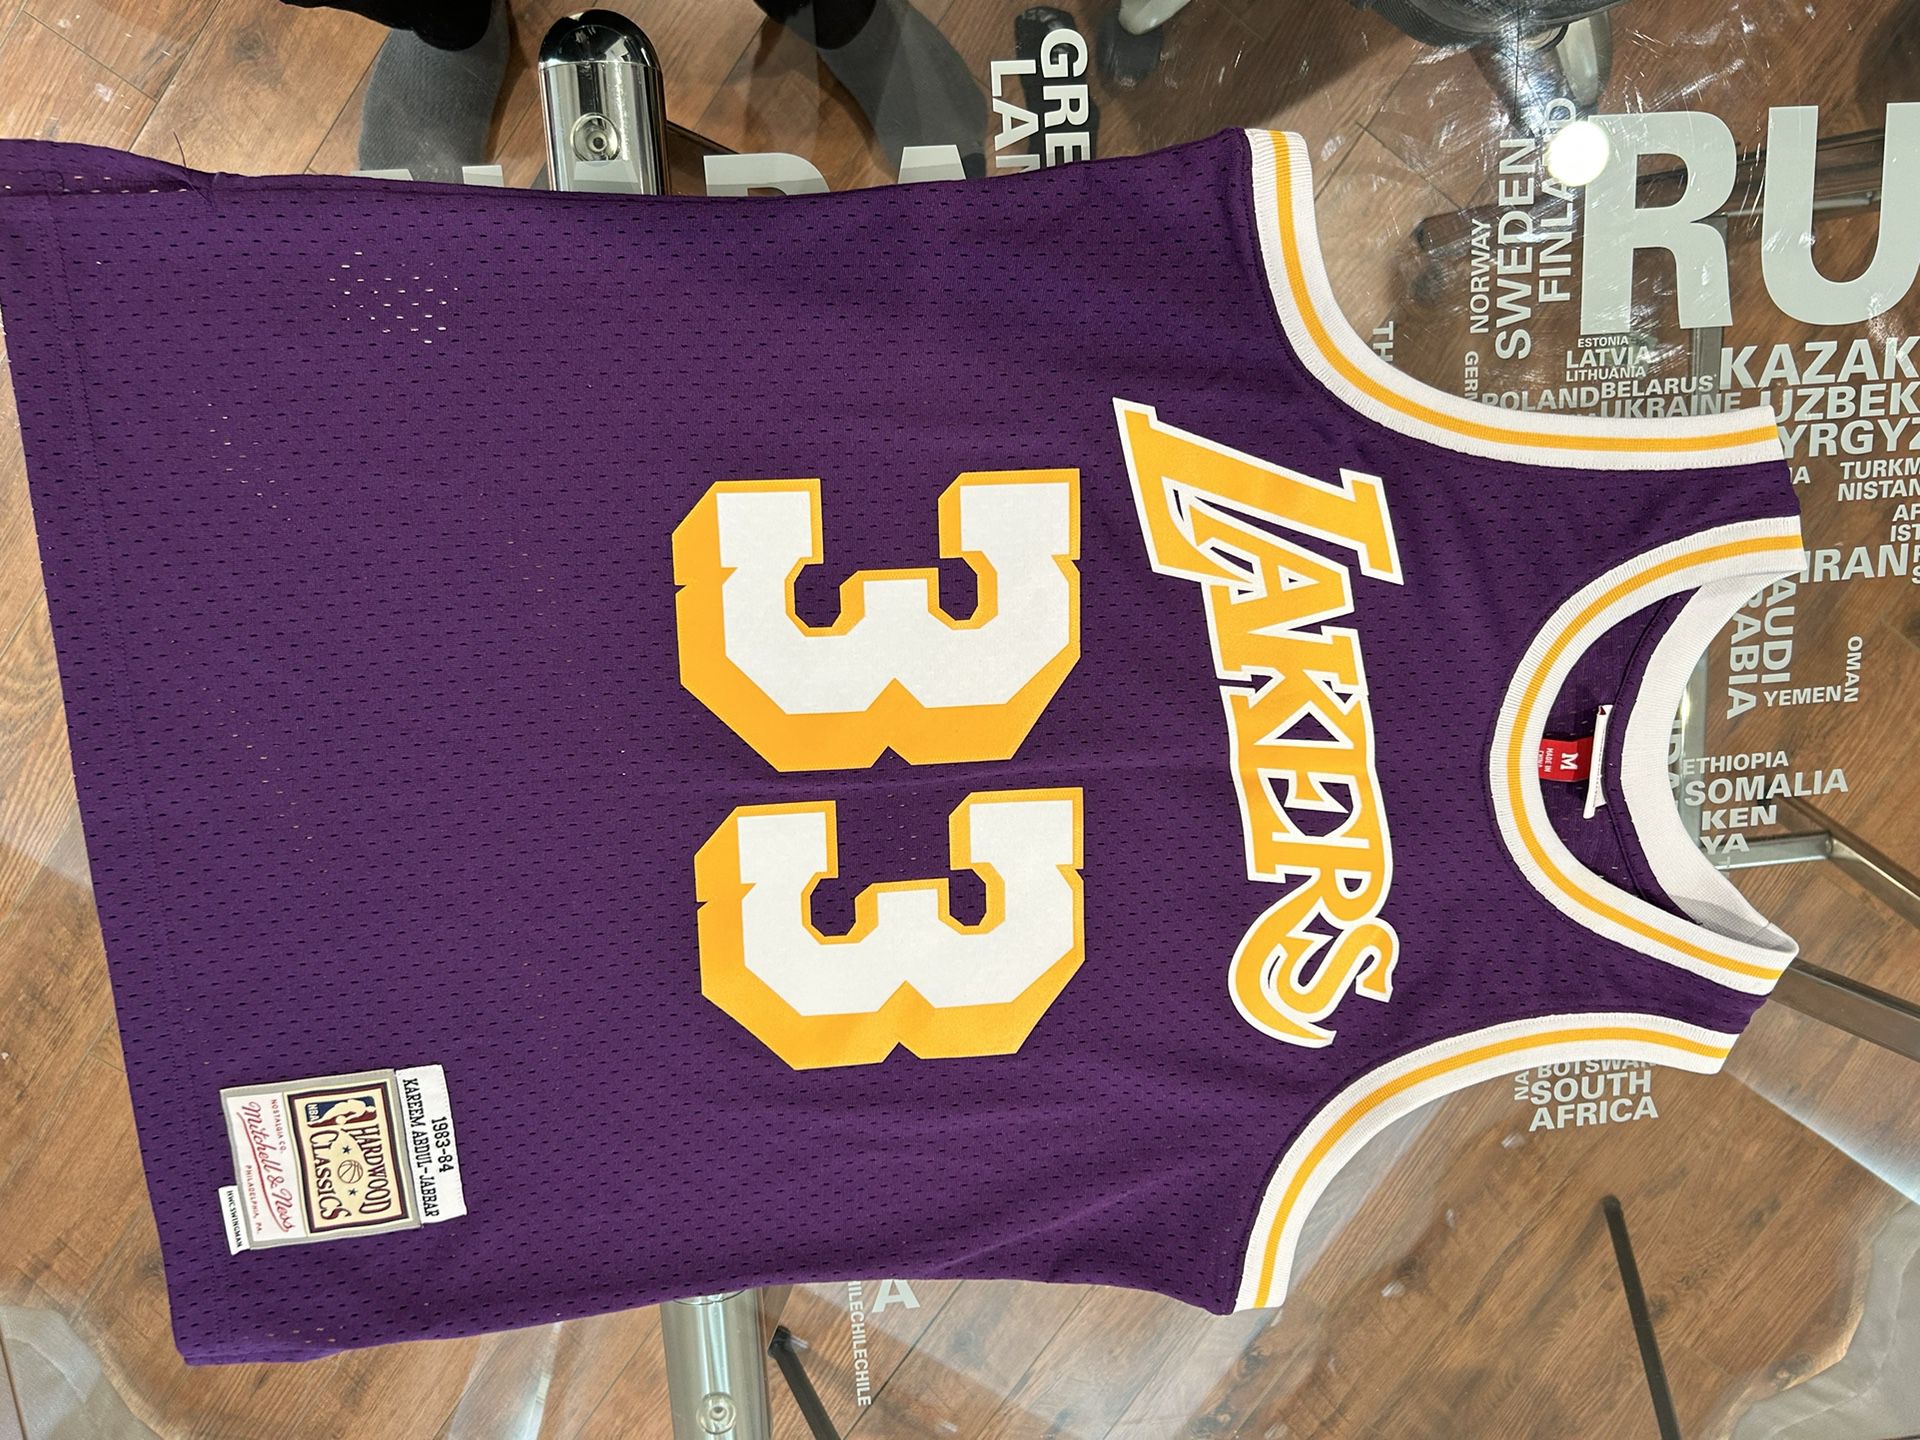 Lakers Jersey Size Medium 139$ Obo